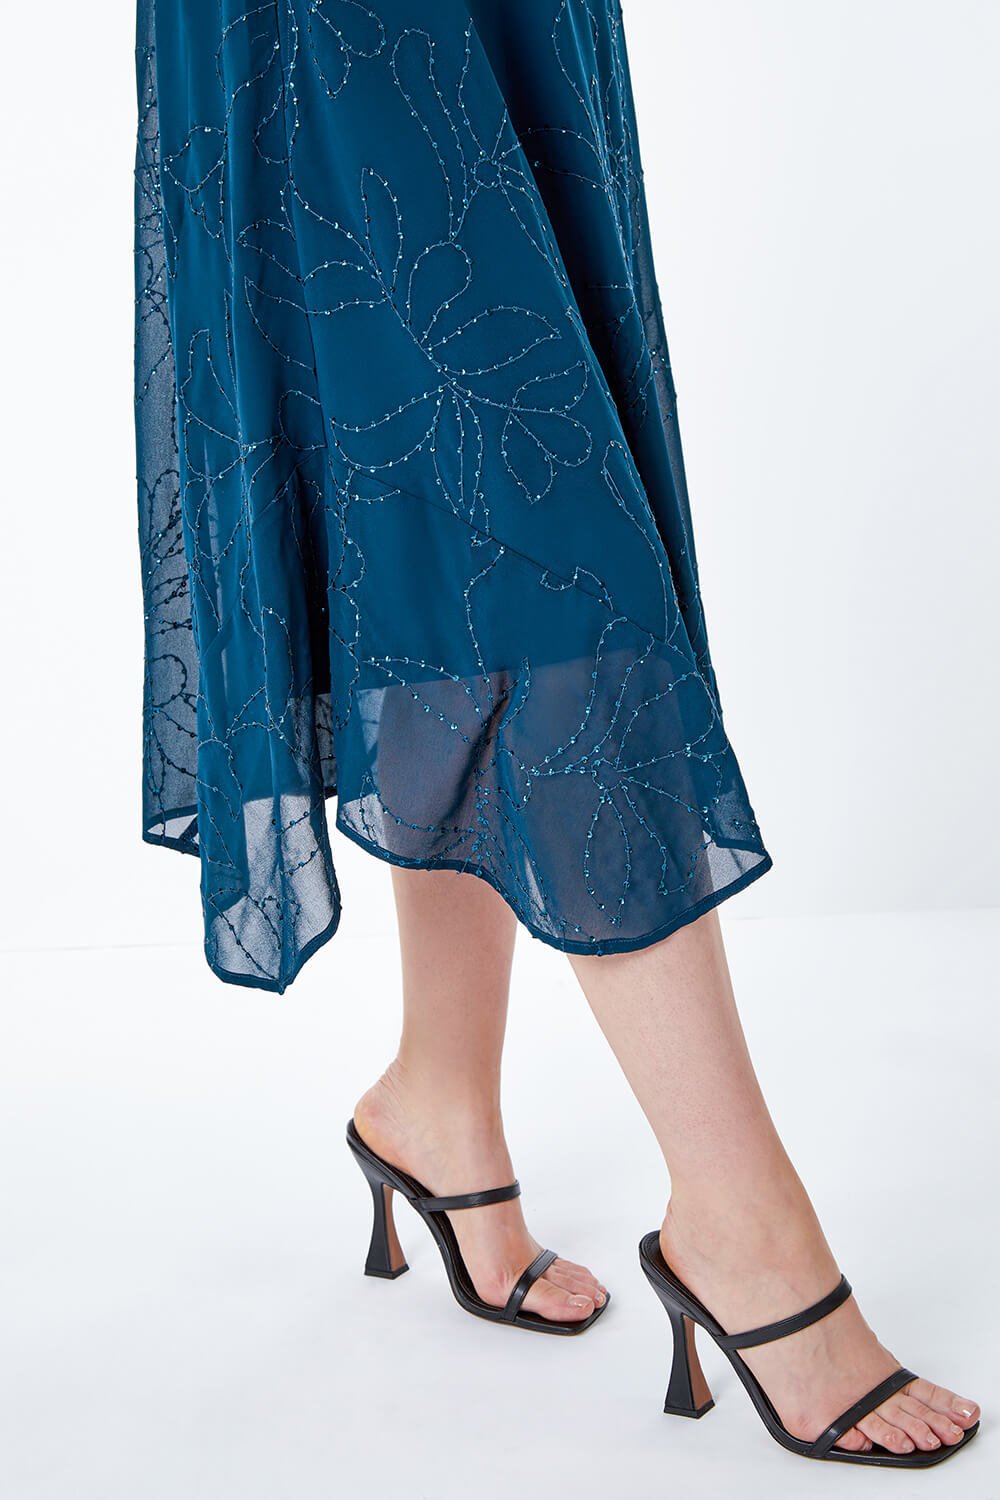 Teal Embroidered Sequin Hanky Hem Dress, Image 5 of 5